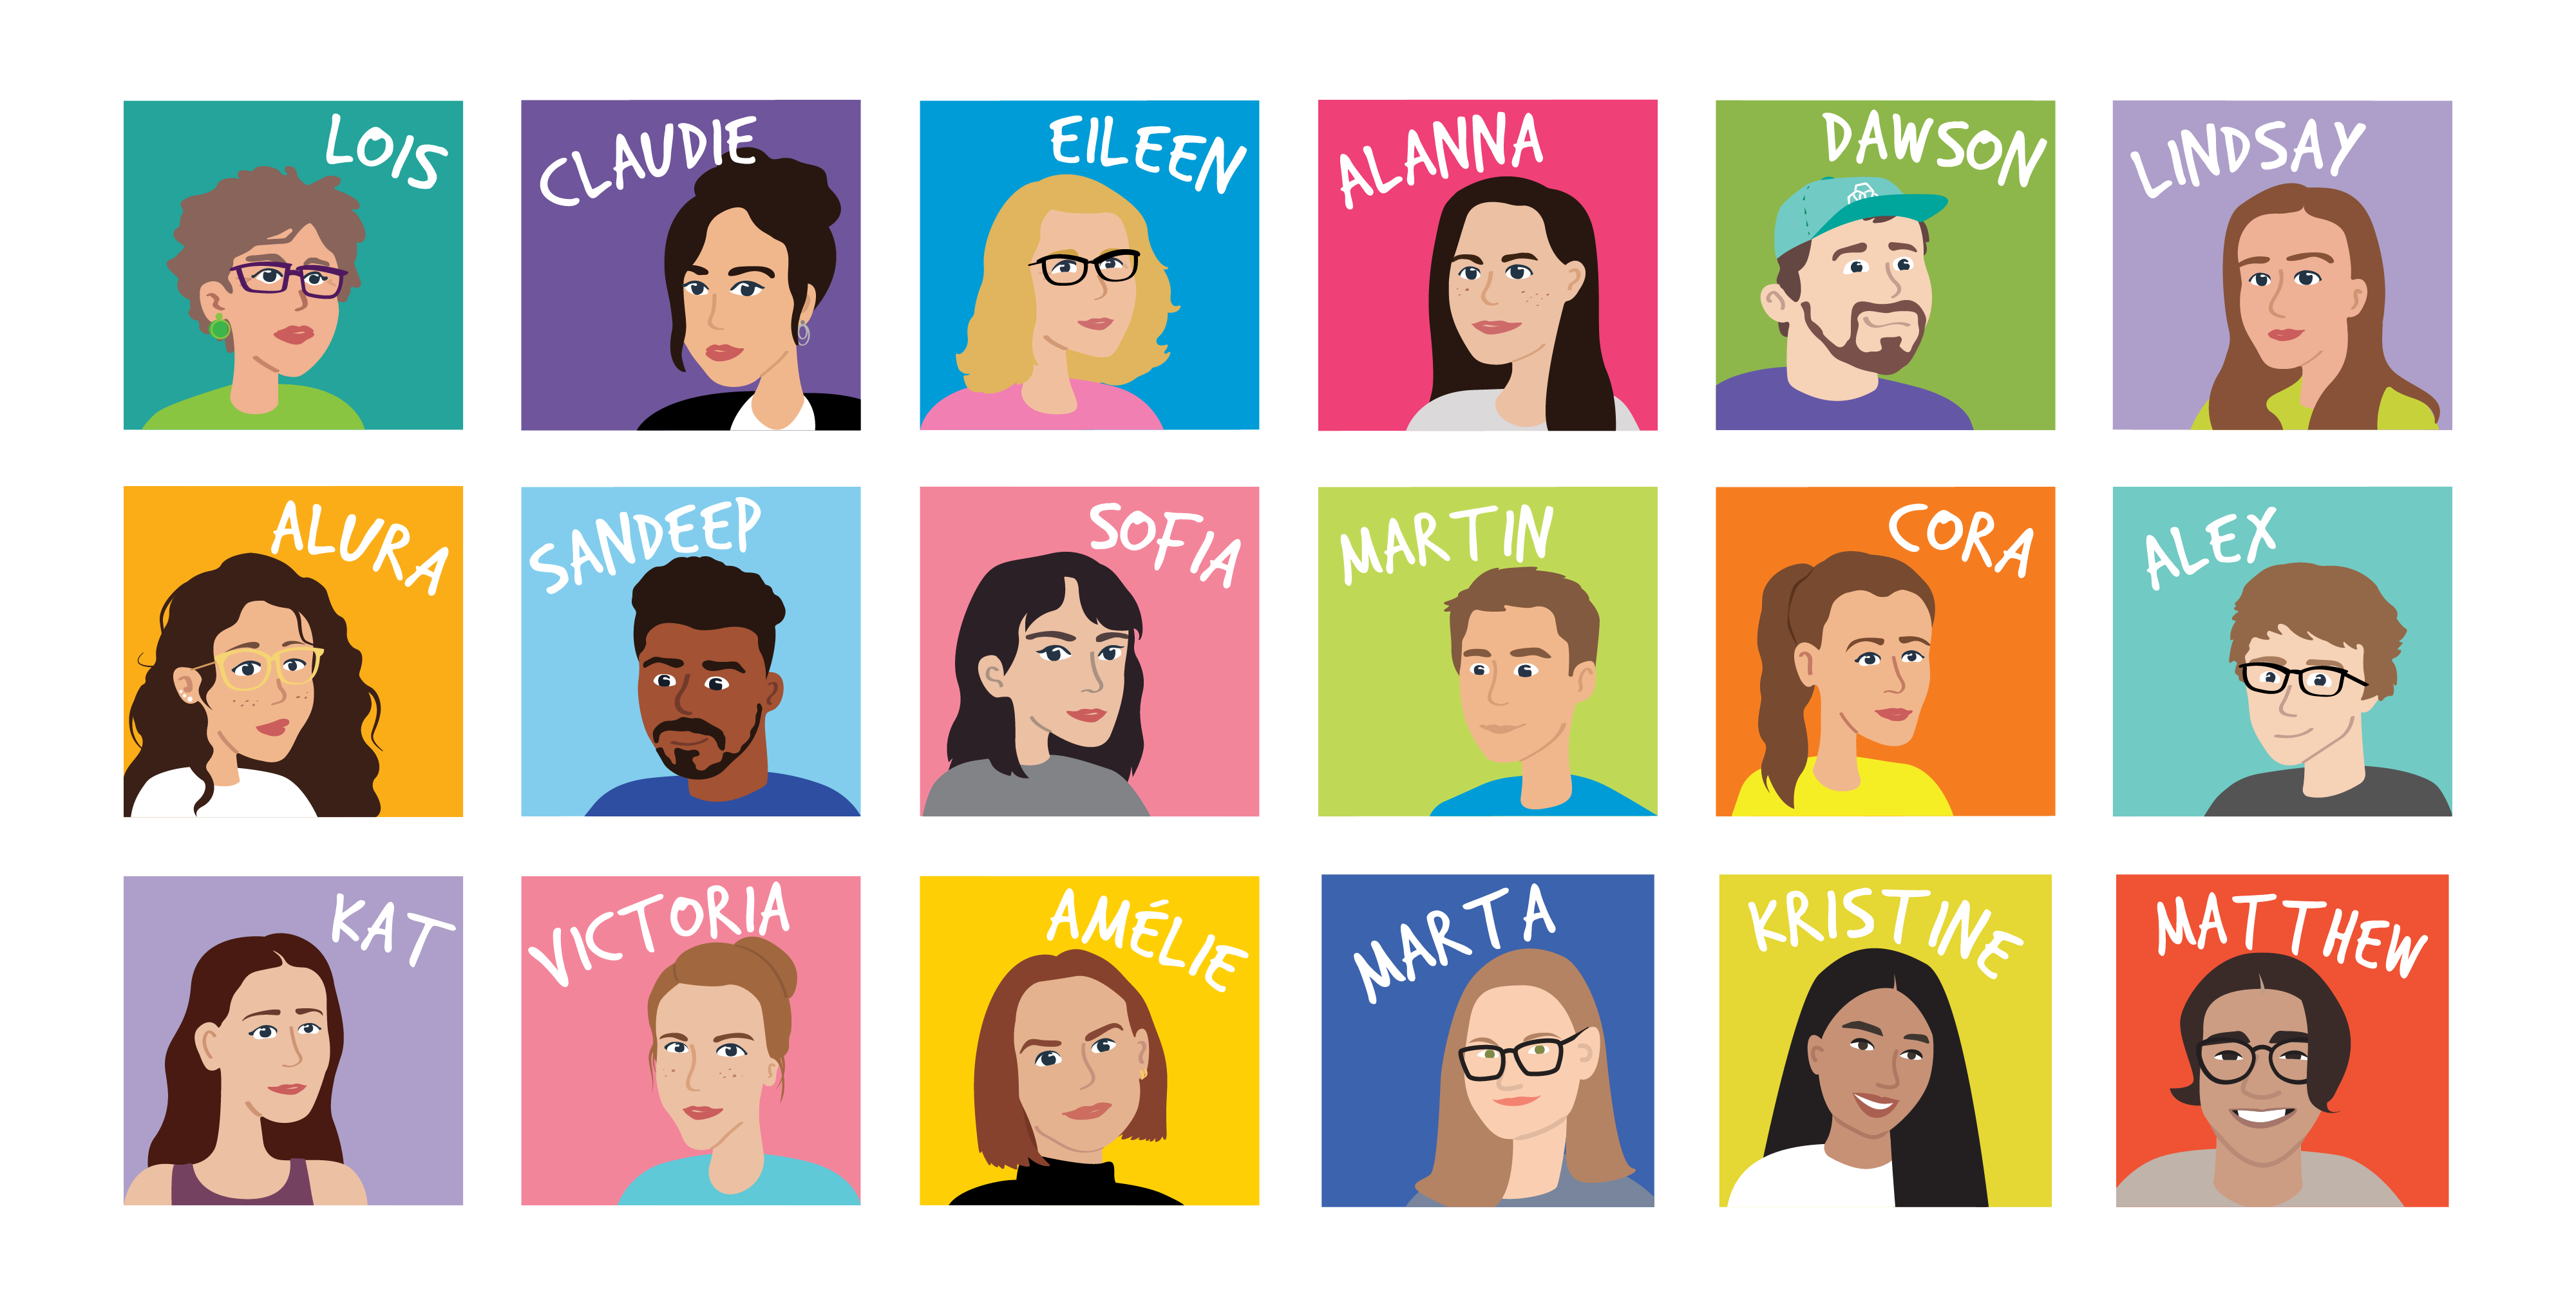 Sense-It! Team. Illustrations of members. Left to right: Lois, Claudie, Eileen, Alanna, Dawson, Lindsay, Alura, Sandeep, Sofia, Martin, Cora, Alex, Kat, Victoria, Amélie, Marta, Kristine, Matthew.